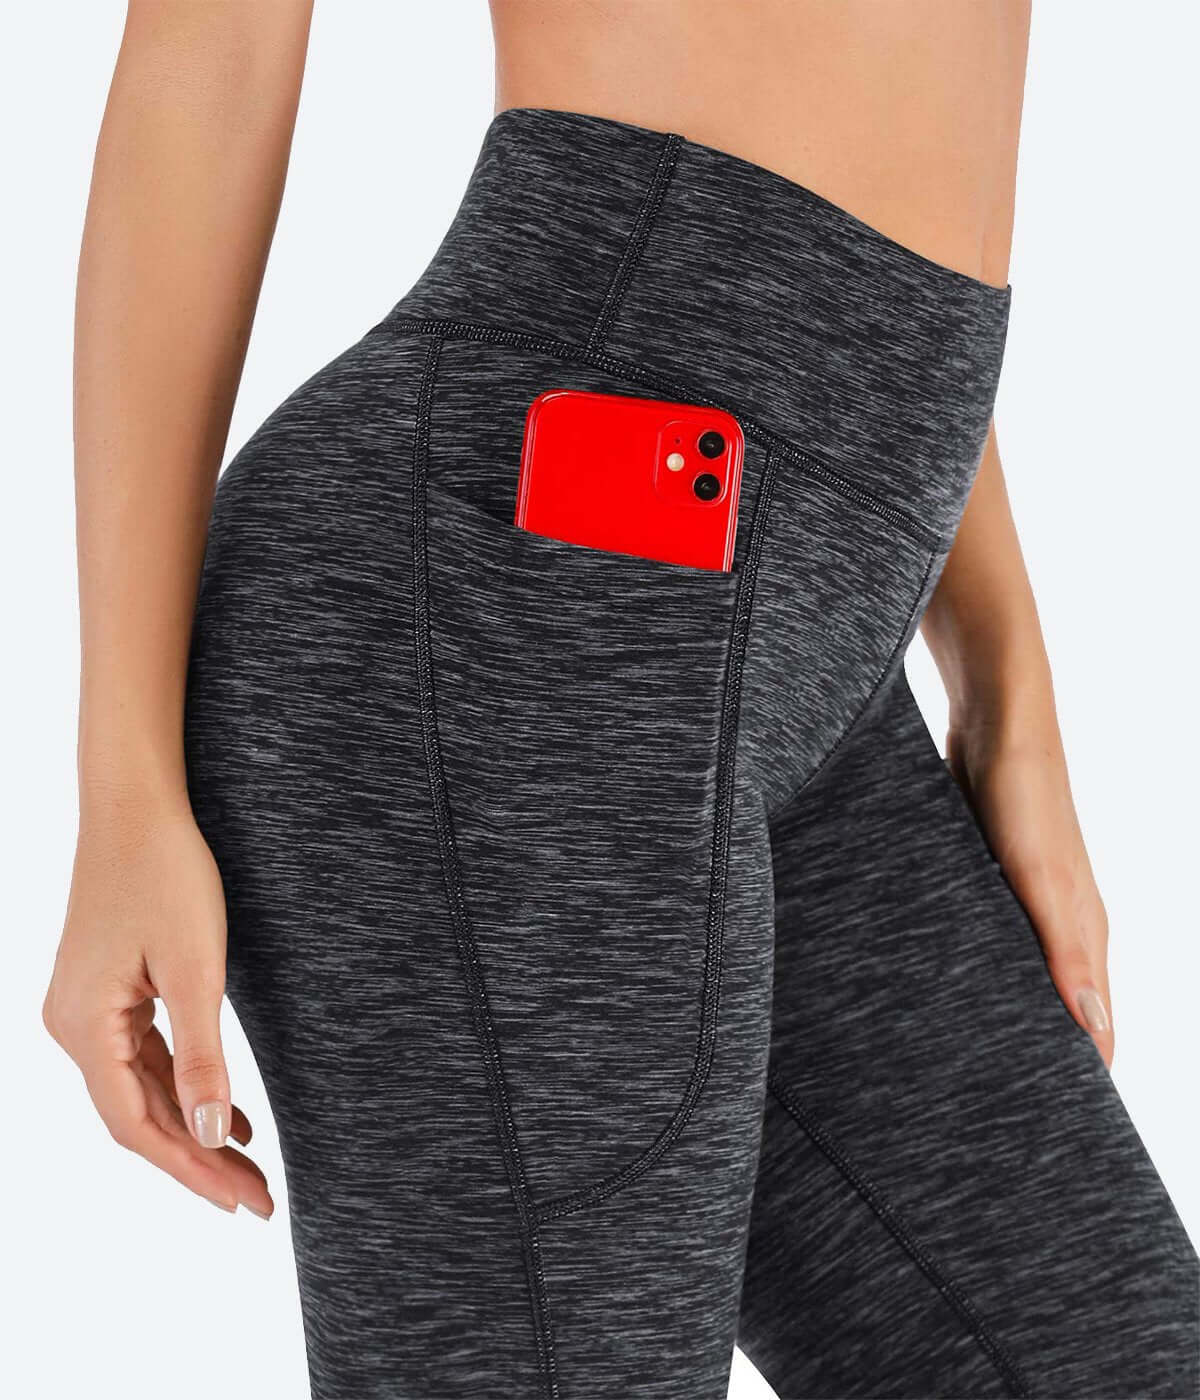 KINPLE Women's Bootcut Yoga Pants with Pockets Tummy Control